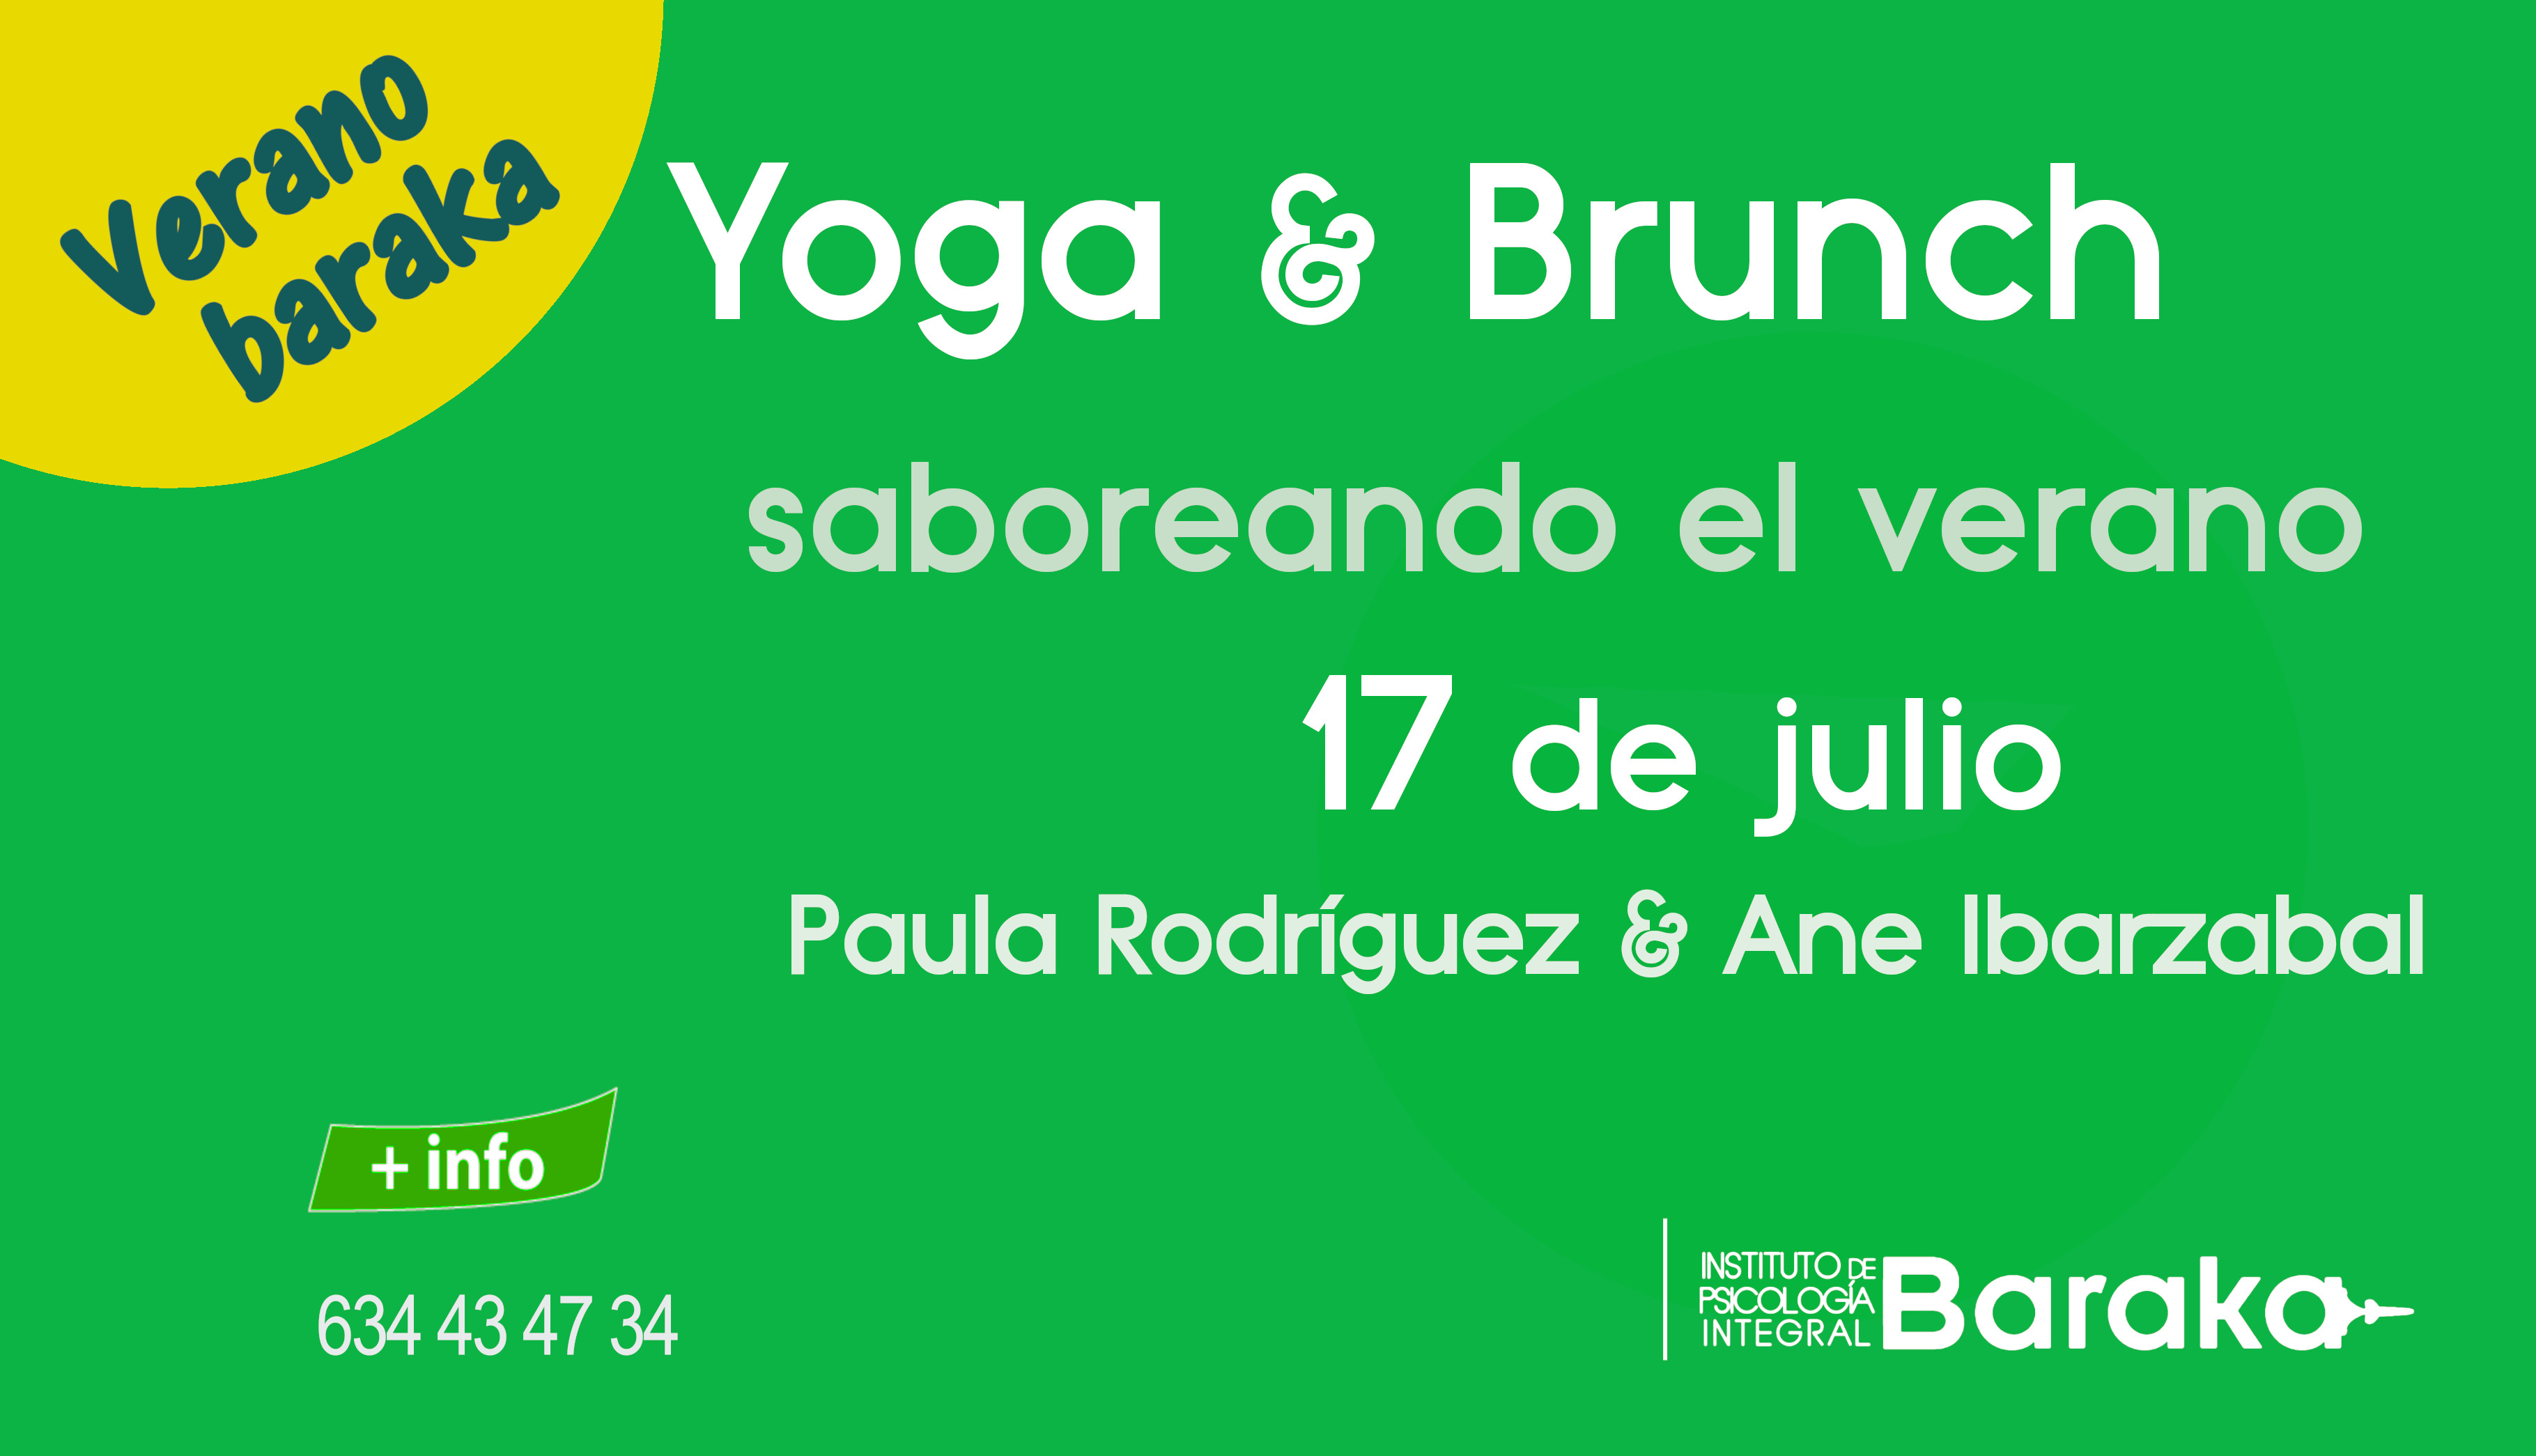 Yoga & Brunch en julio